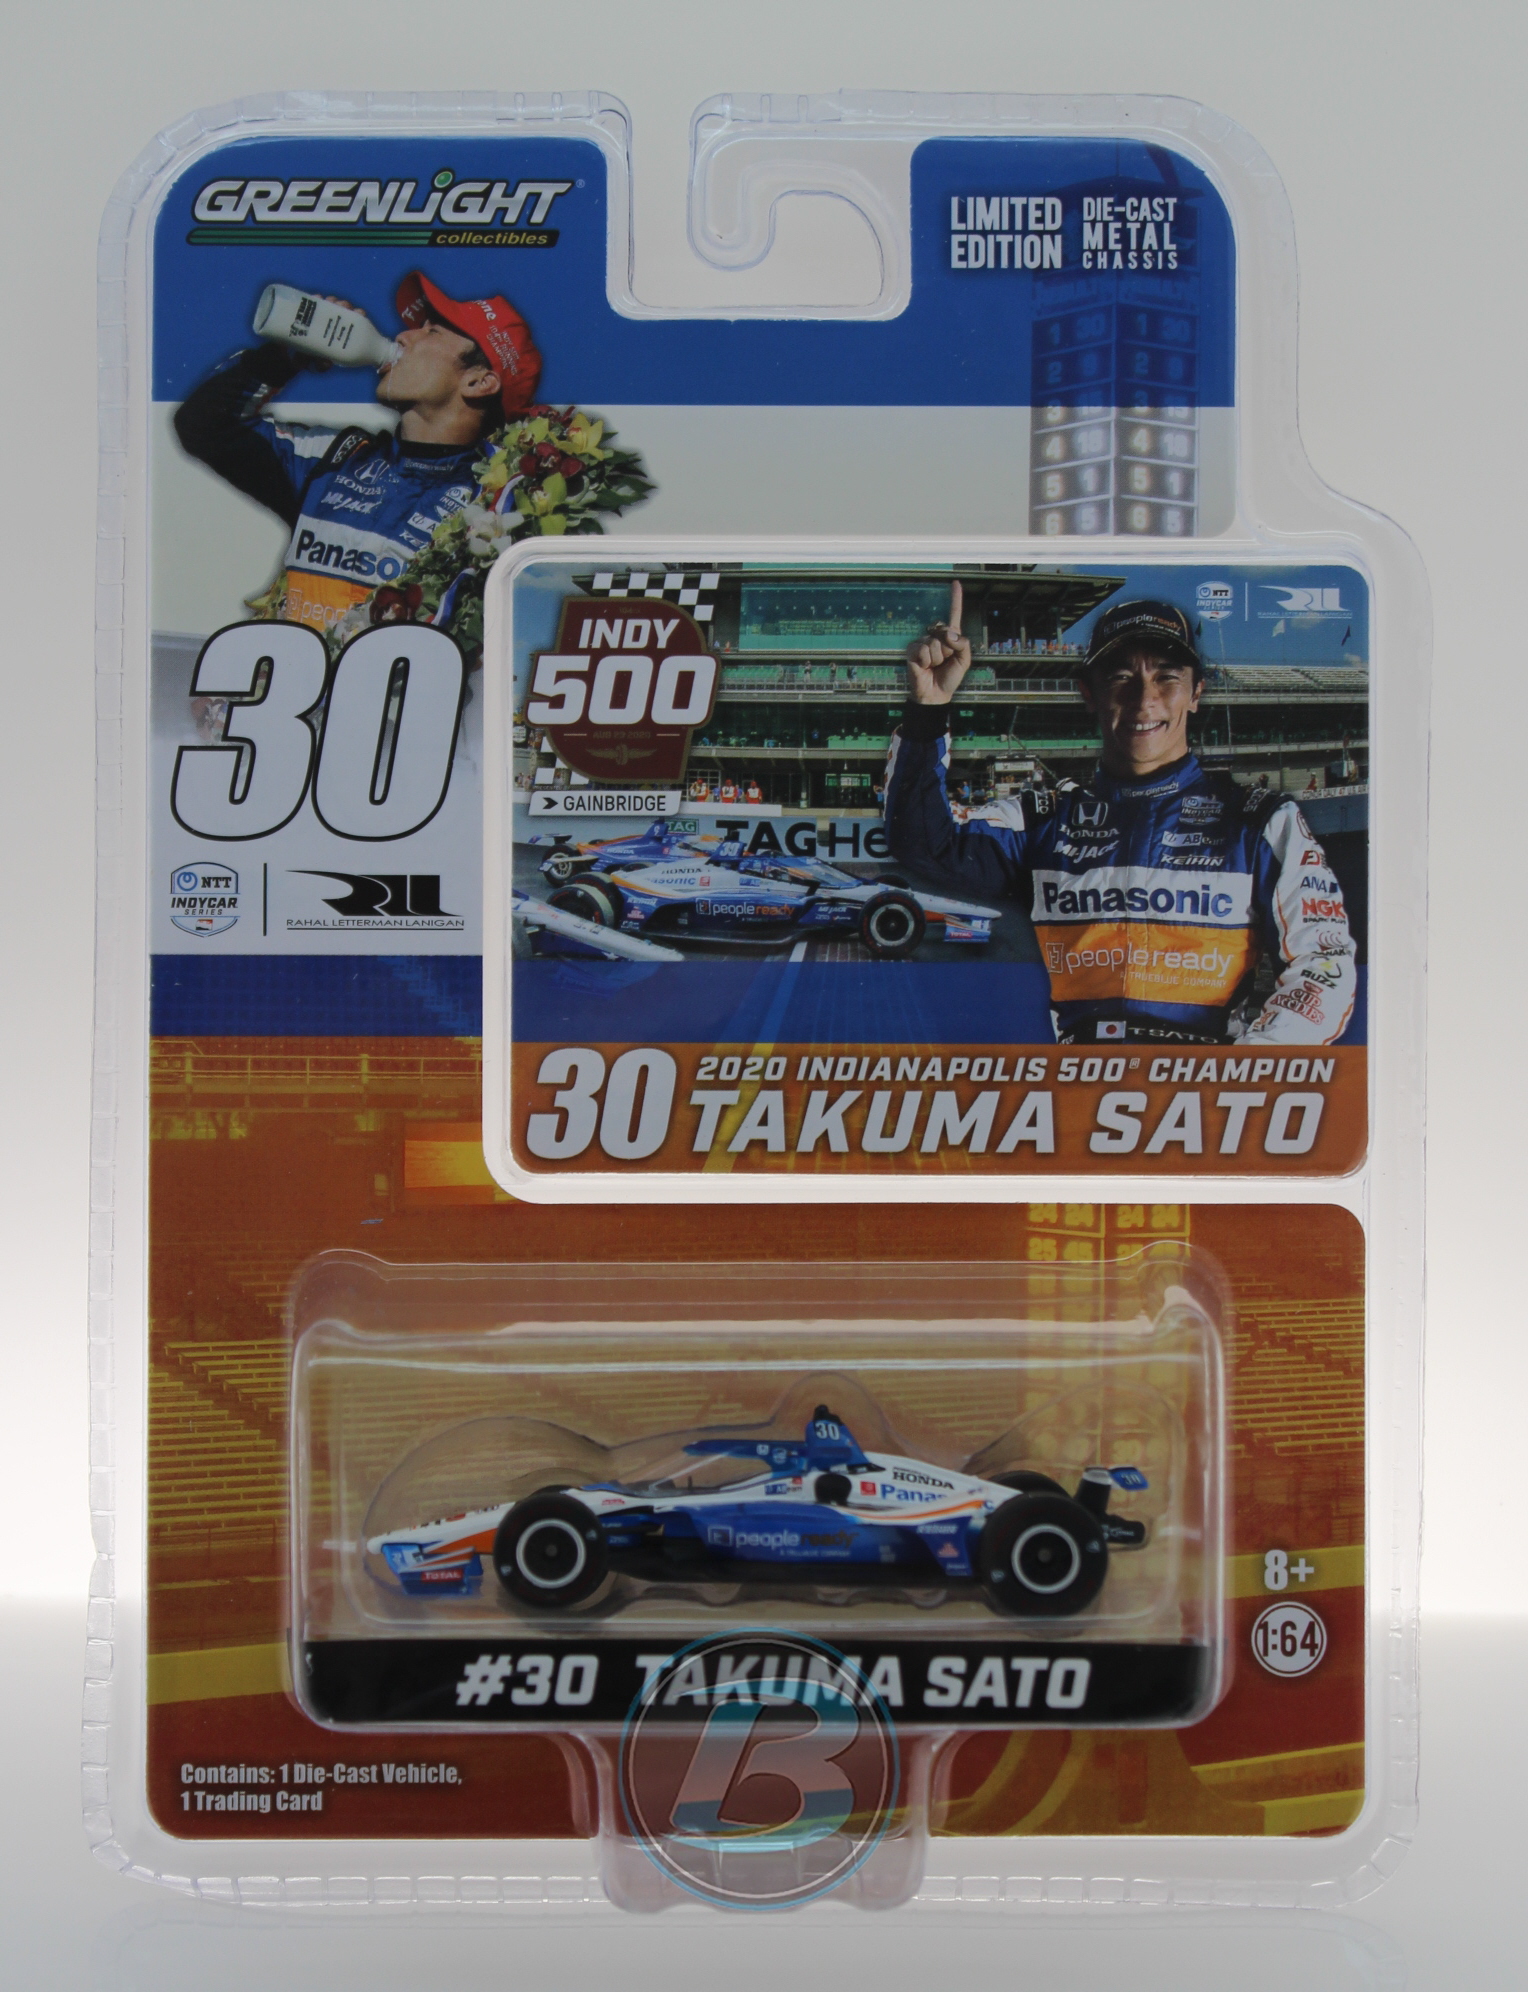 2020 Takuma Sato #30 PeopleReady Indy 500 Championship 1:64 Diecast 